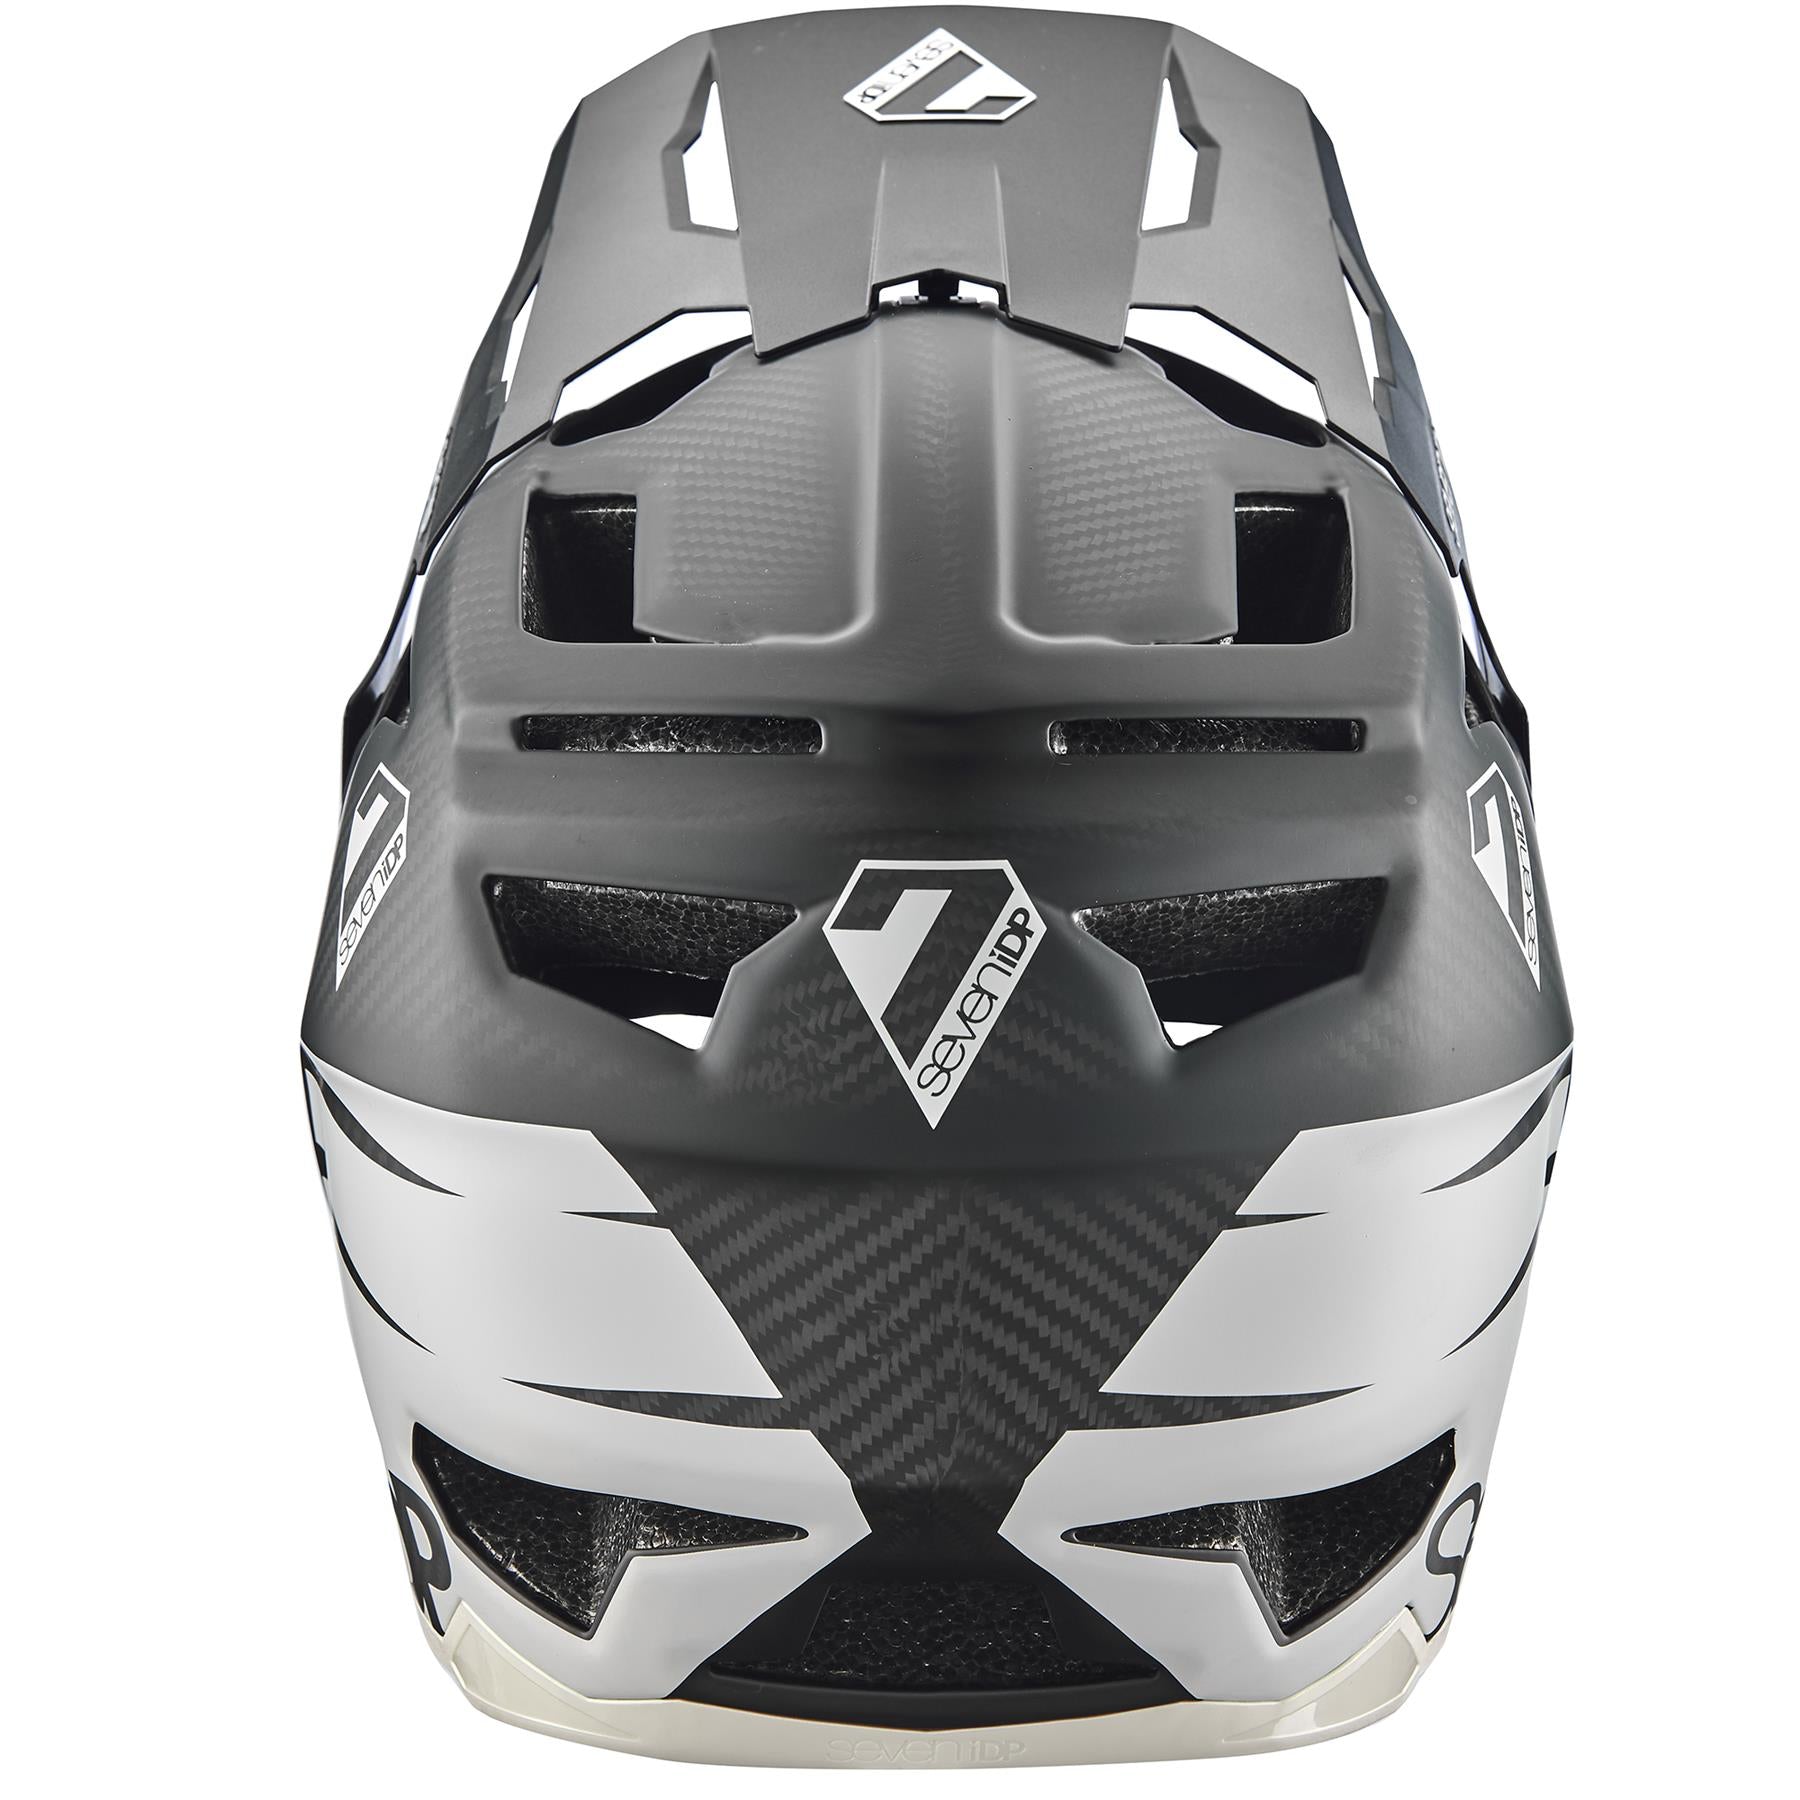 Seven iDP Project 23 Carbon Race Helmet - Cool Grey /Raw Carbon